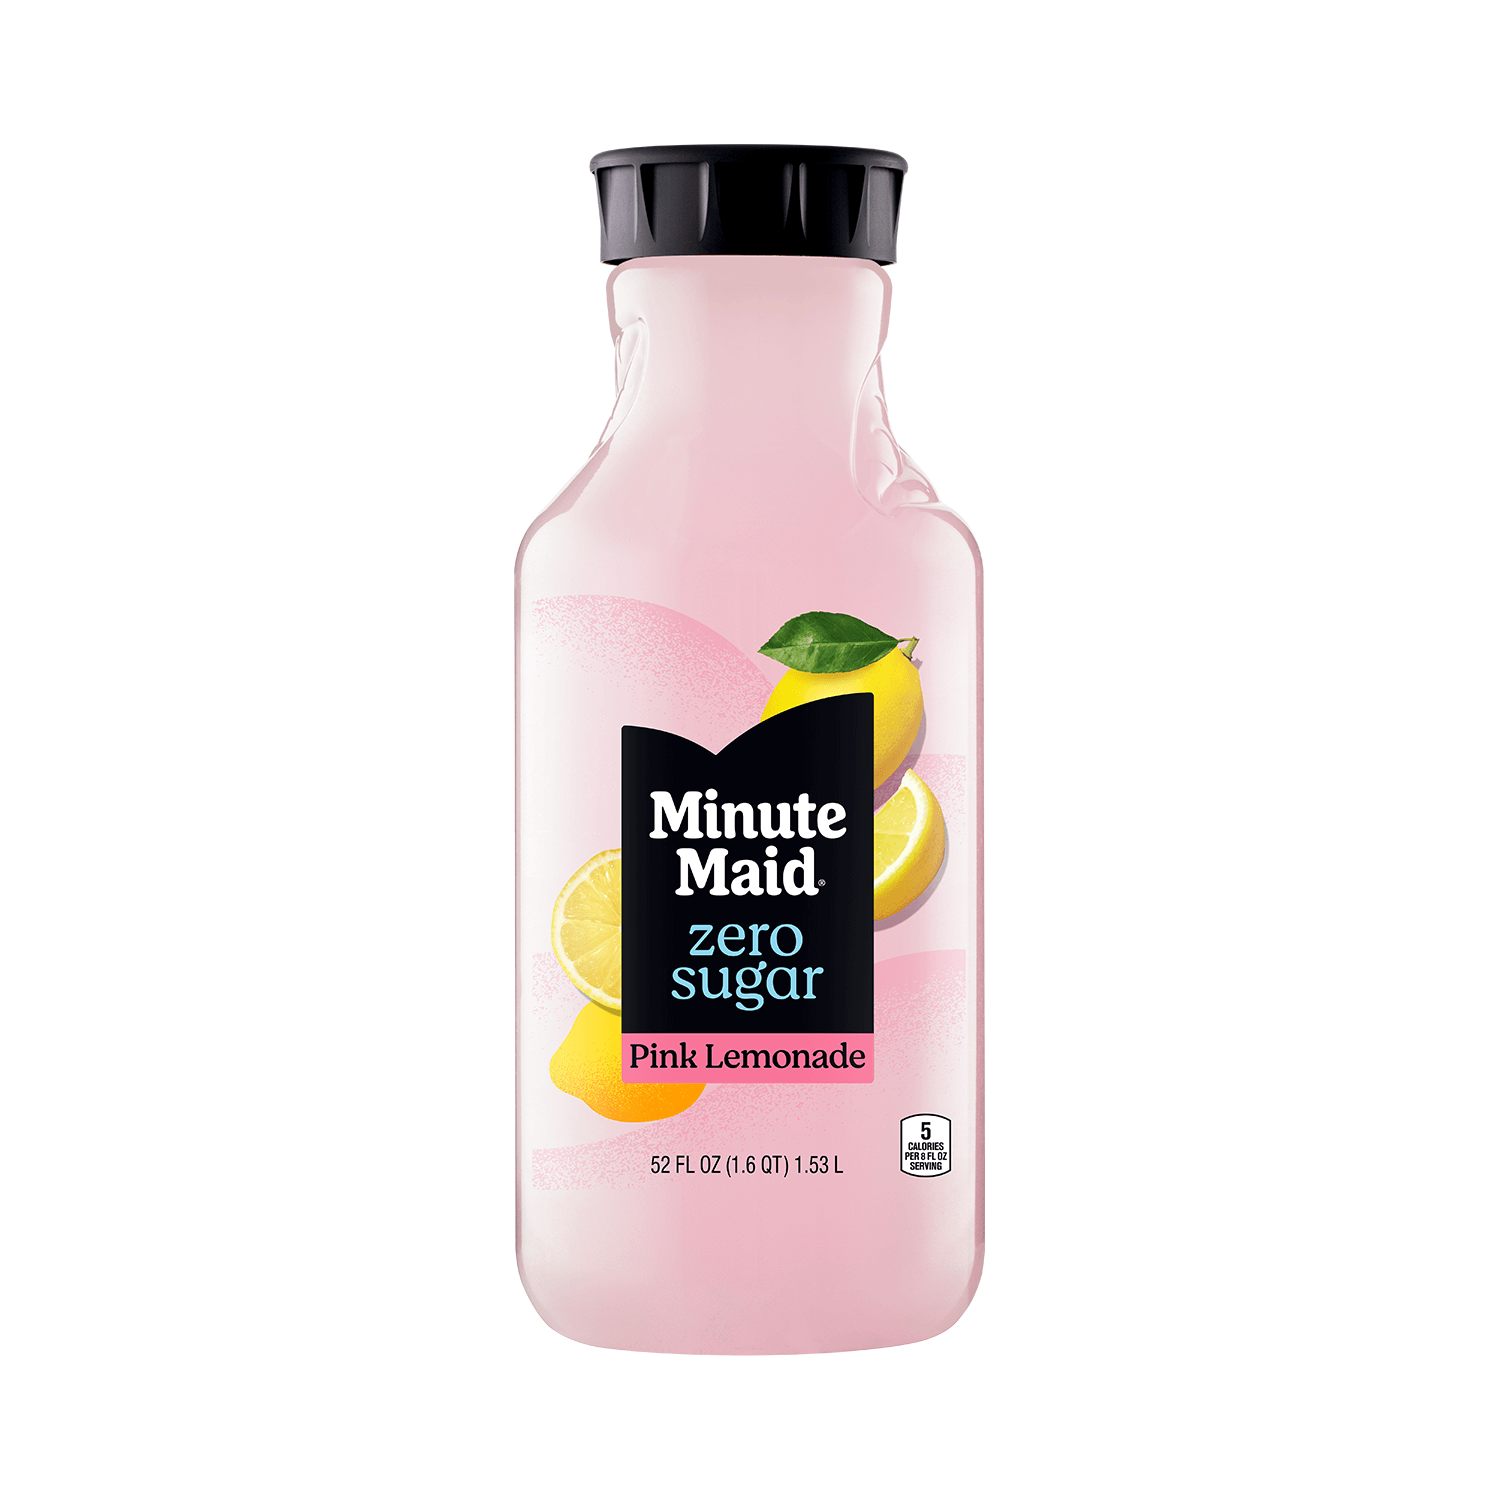 Minute Maid Zero Sugar Pink Lemonade bottle